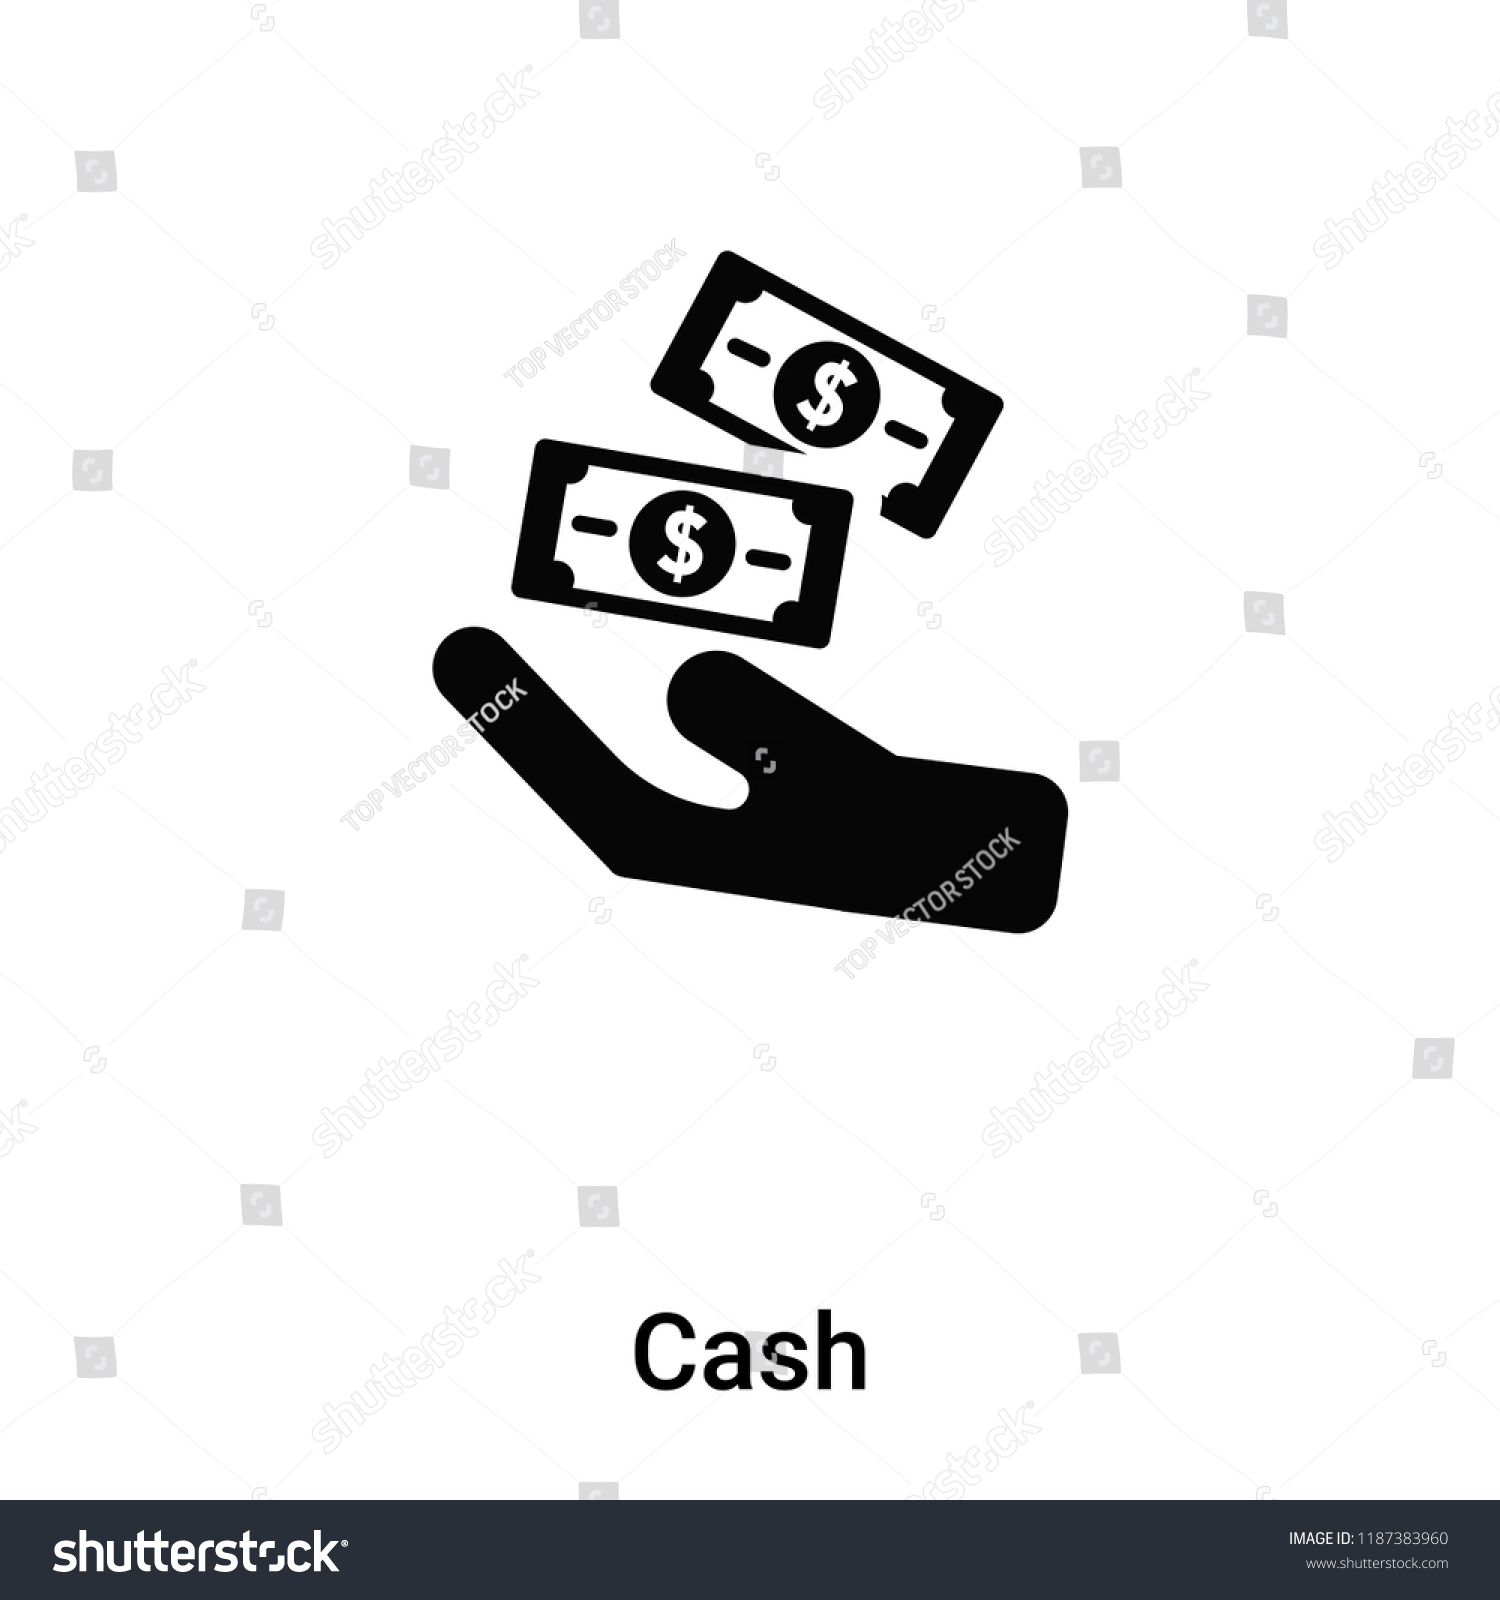 SVG of Cash icon vector isolated on white background, logo concept of Cash sign on transparent background, filled black symbol svg